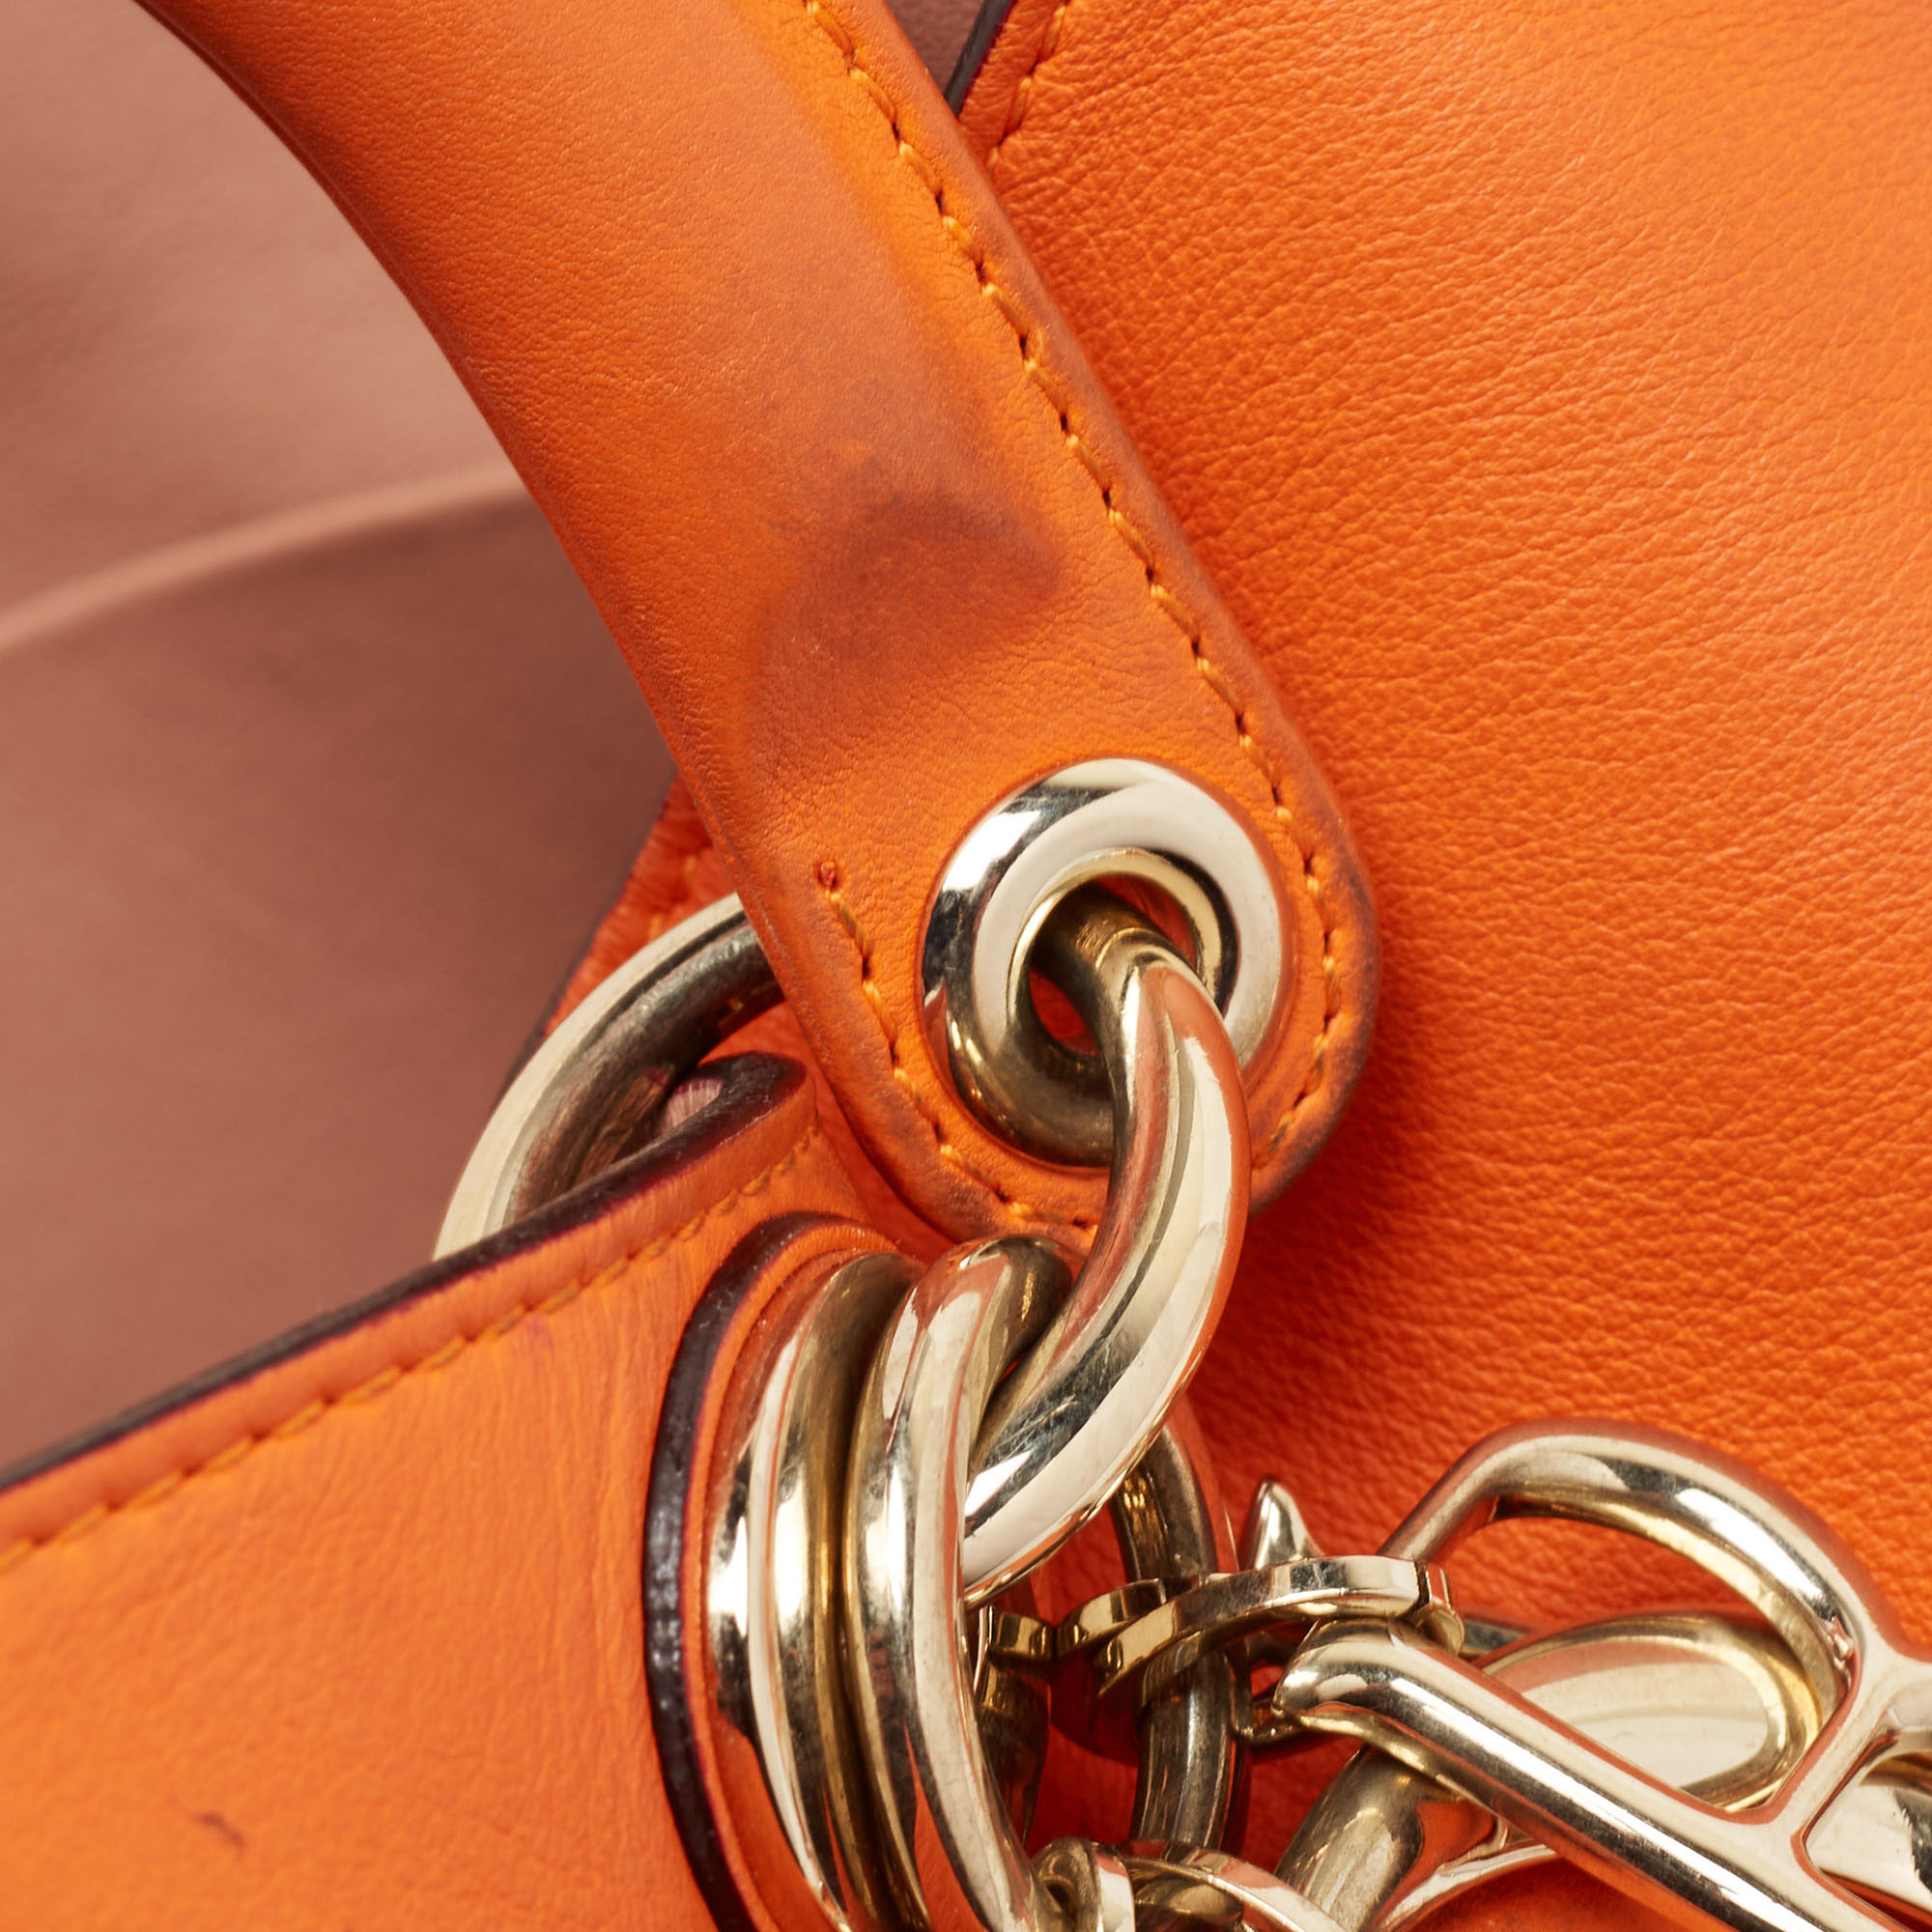 Dior Orange Leather Large Diorissimo Shopper Tote